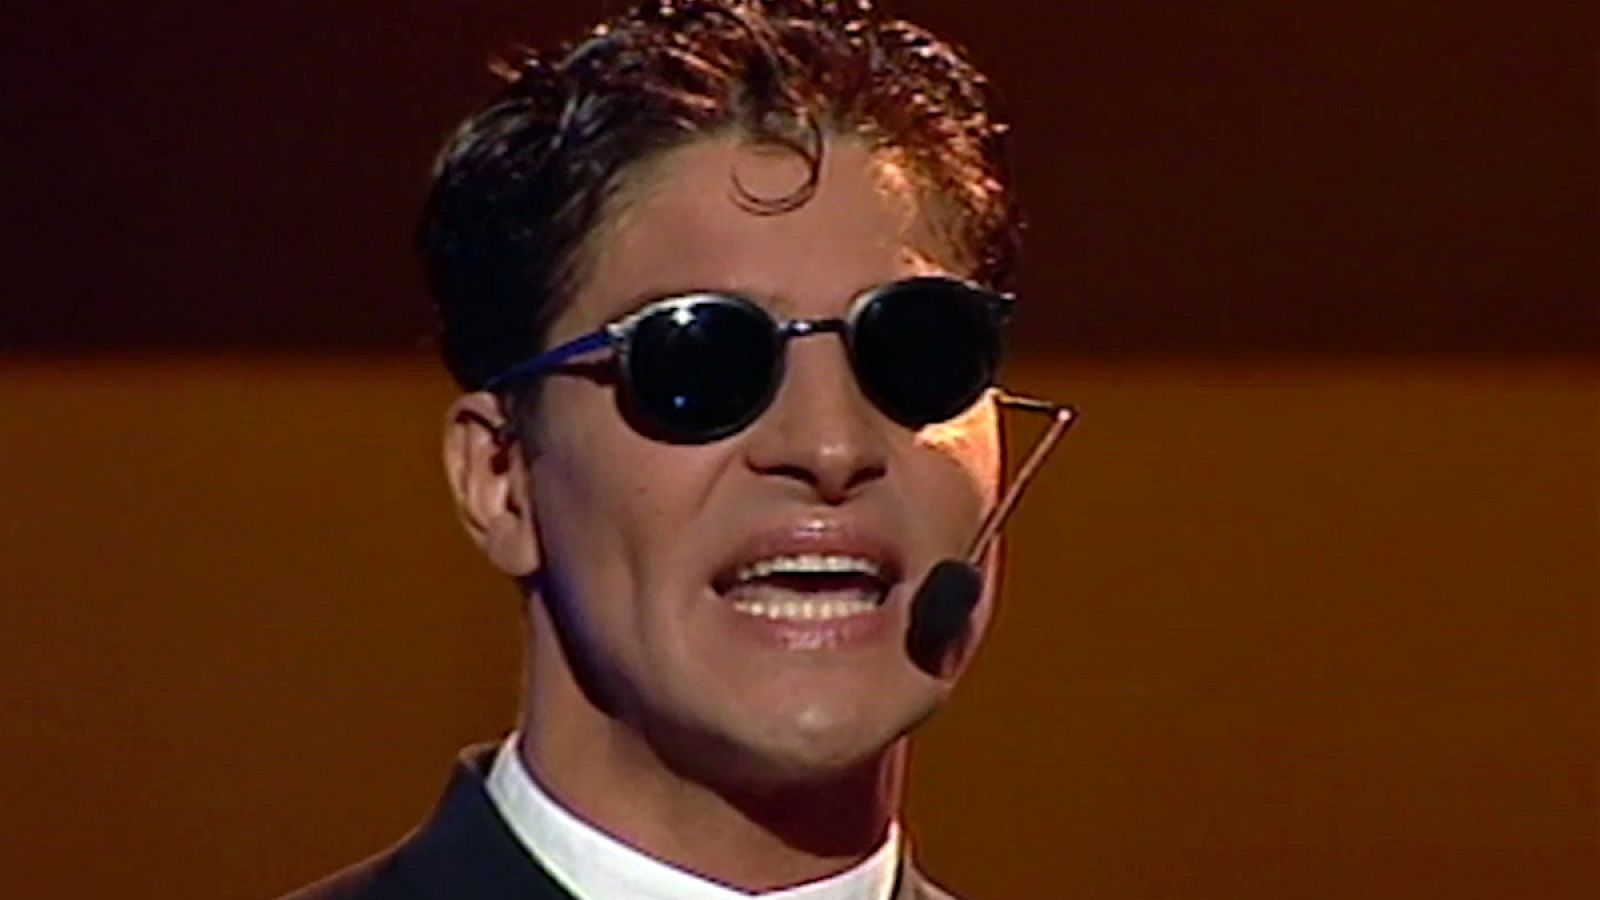 Eurovisión 2000 - Serafín Zubiri cantó "Colgado de un sueño"